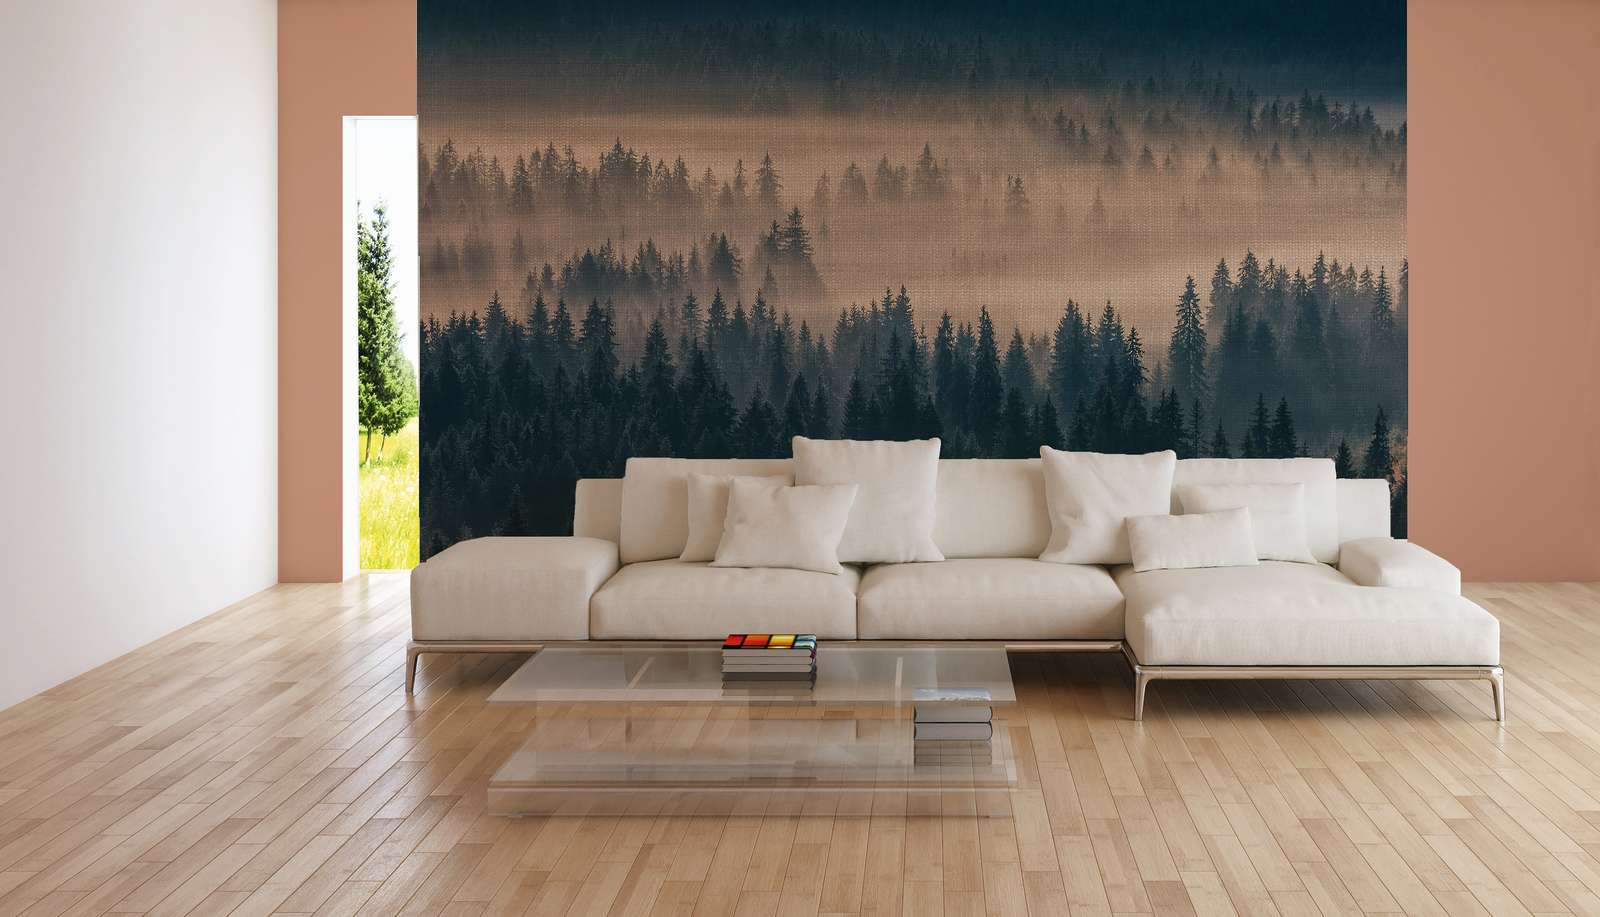             Forest Landscape Wallpaper on Linen Texture Optics - Blue, Beige
        